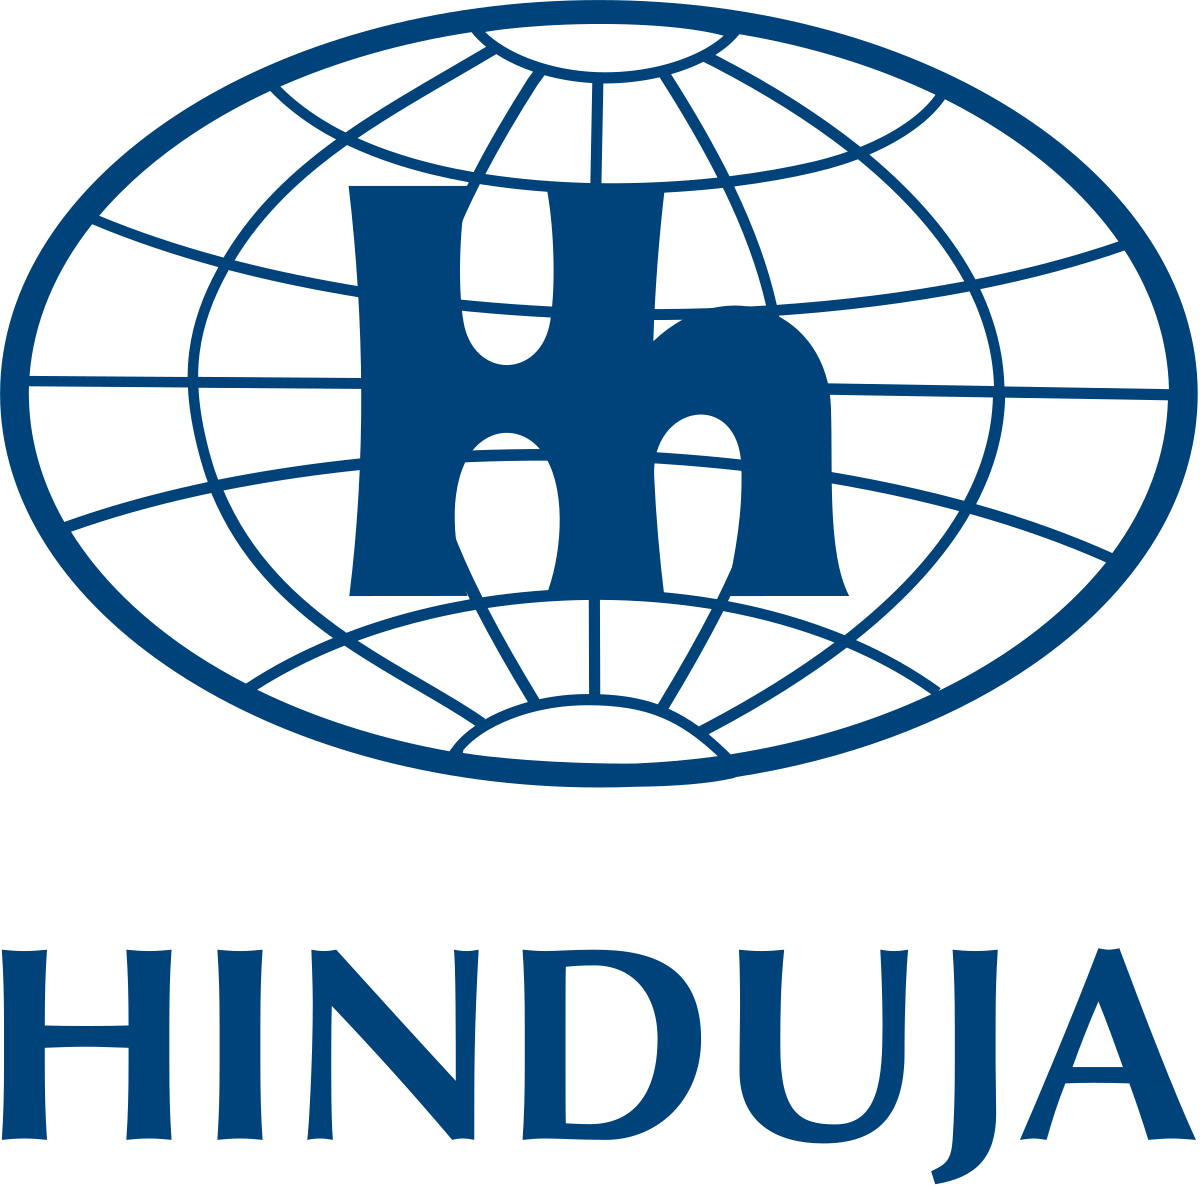 Hinduja Group adds Vipin Sondhi to global leadership team